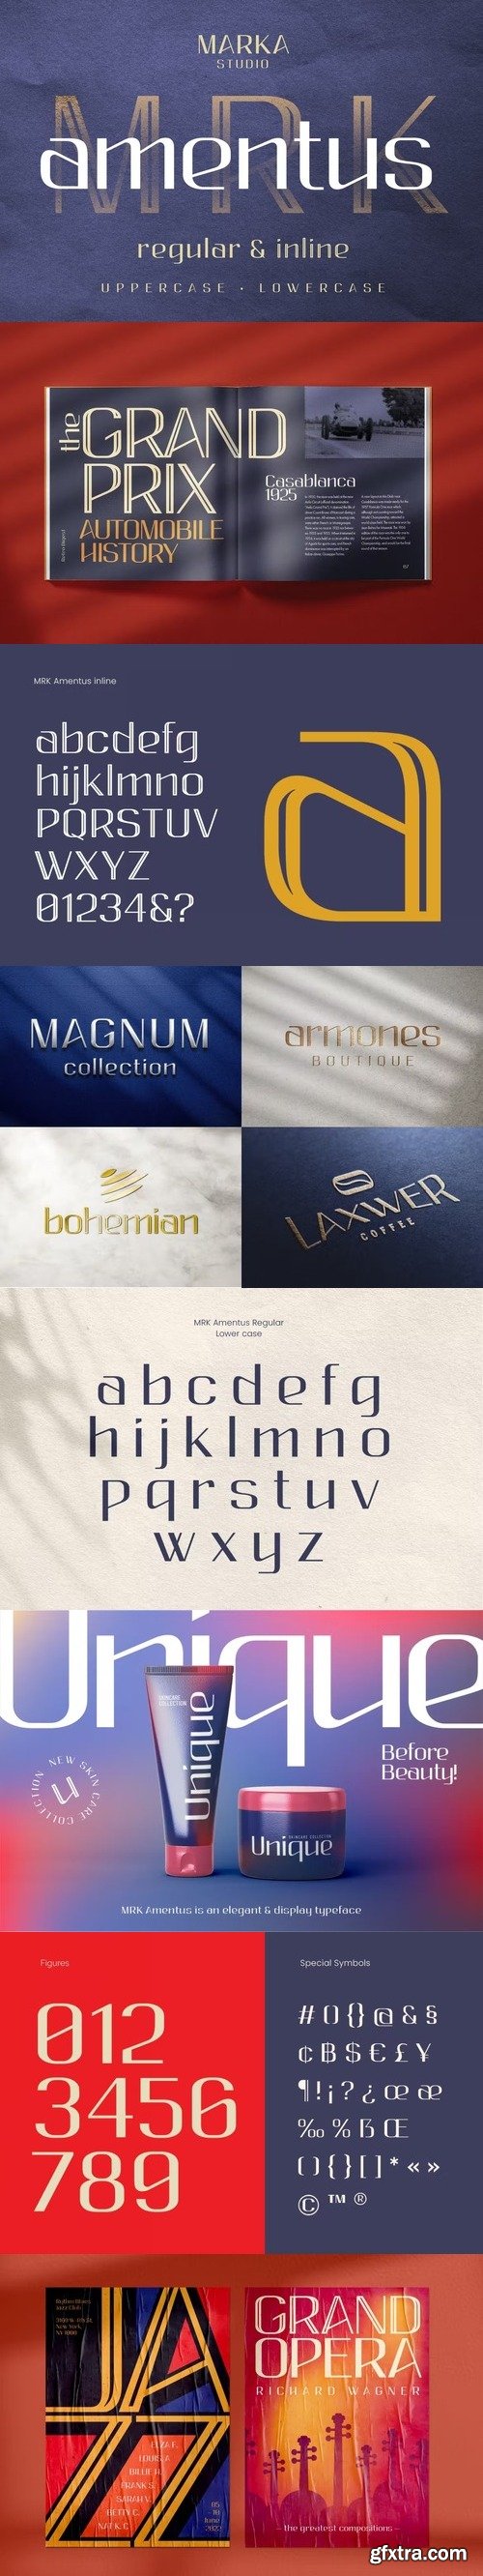 MRK Amentus Elegant Sans-Serif Font